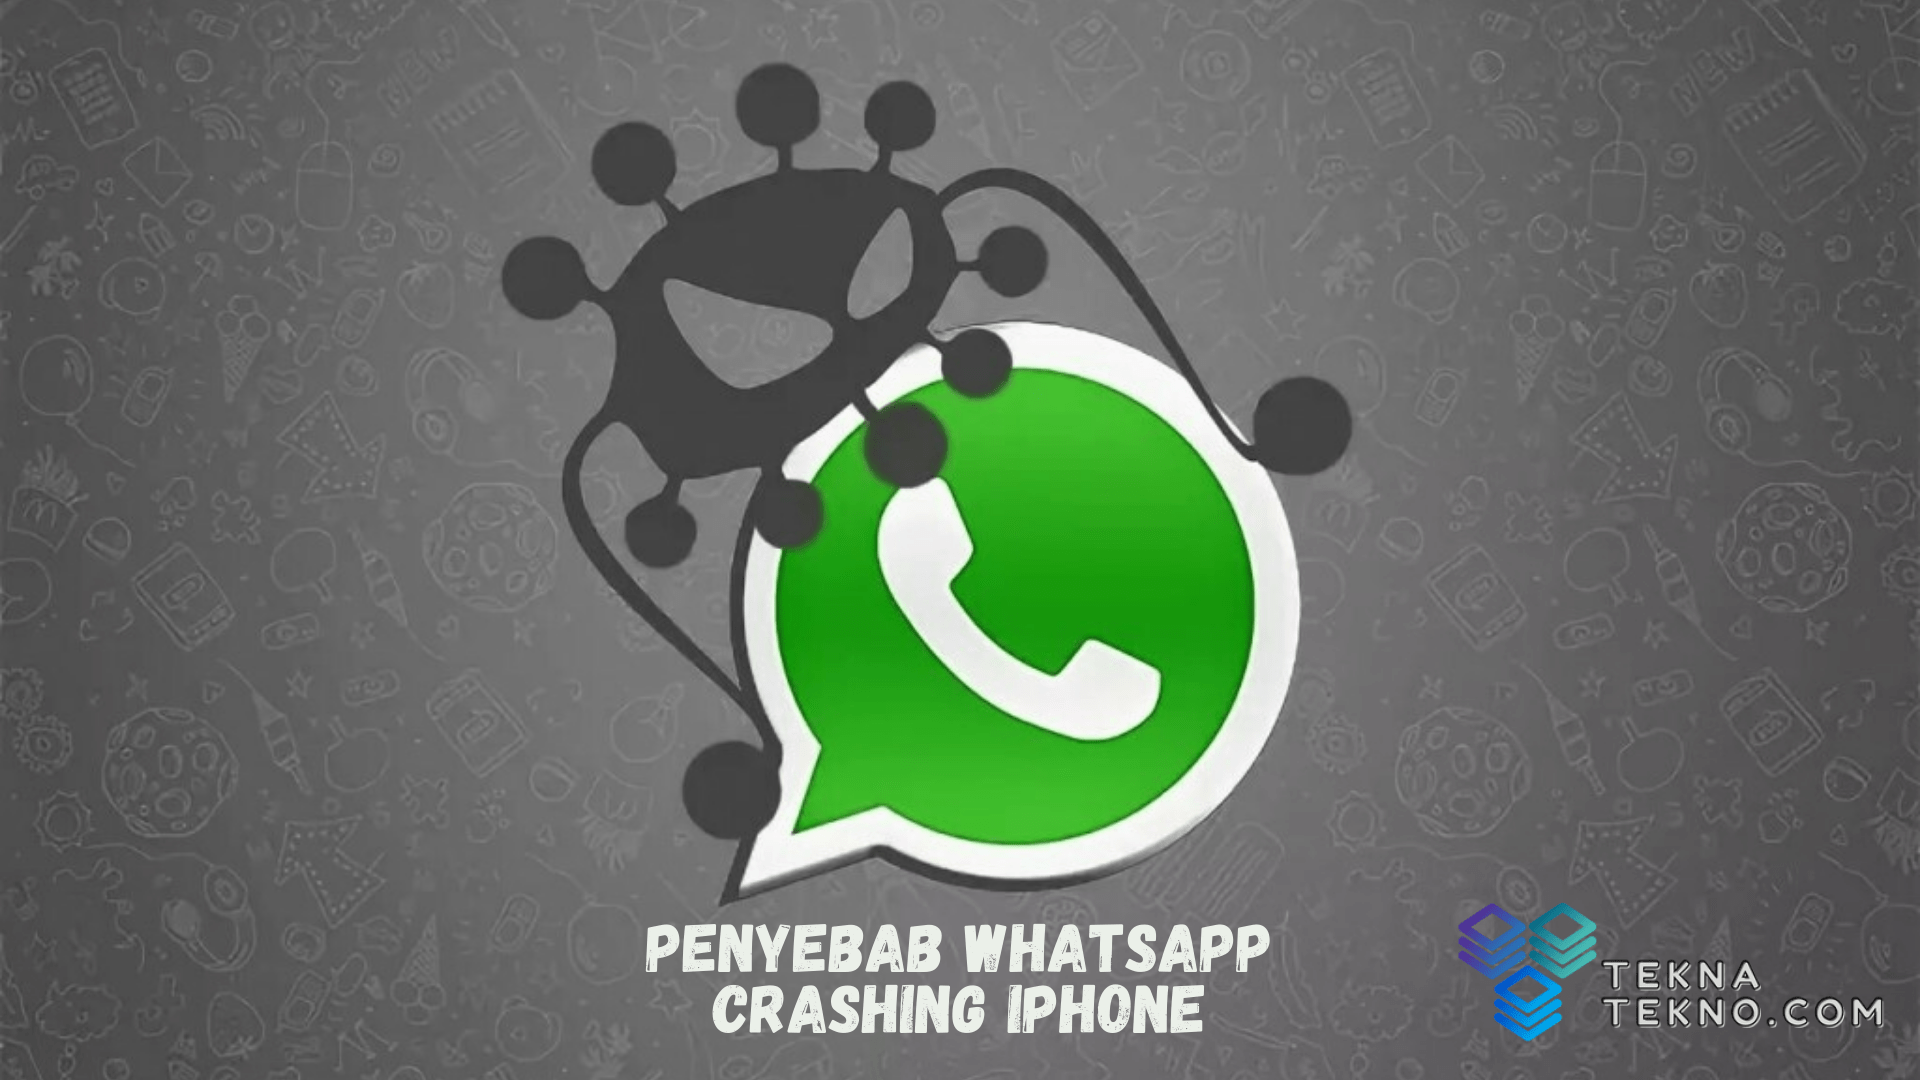 Whatsapp Crashing iPhone Penyebab dan Ciri-Cirinya